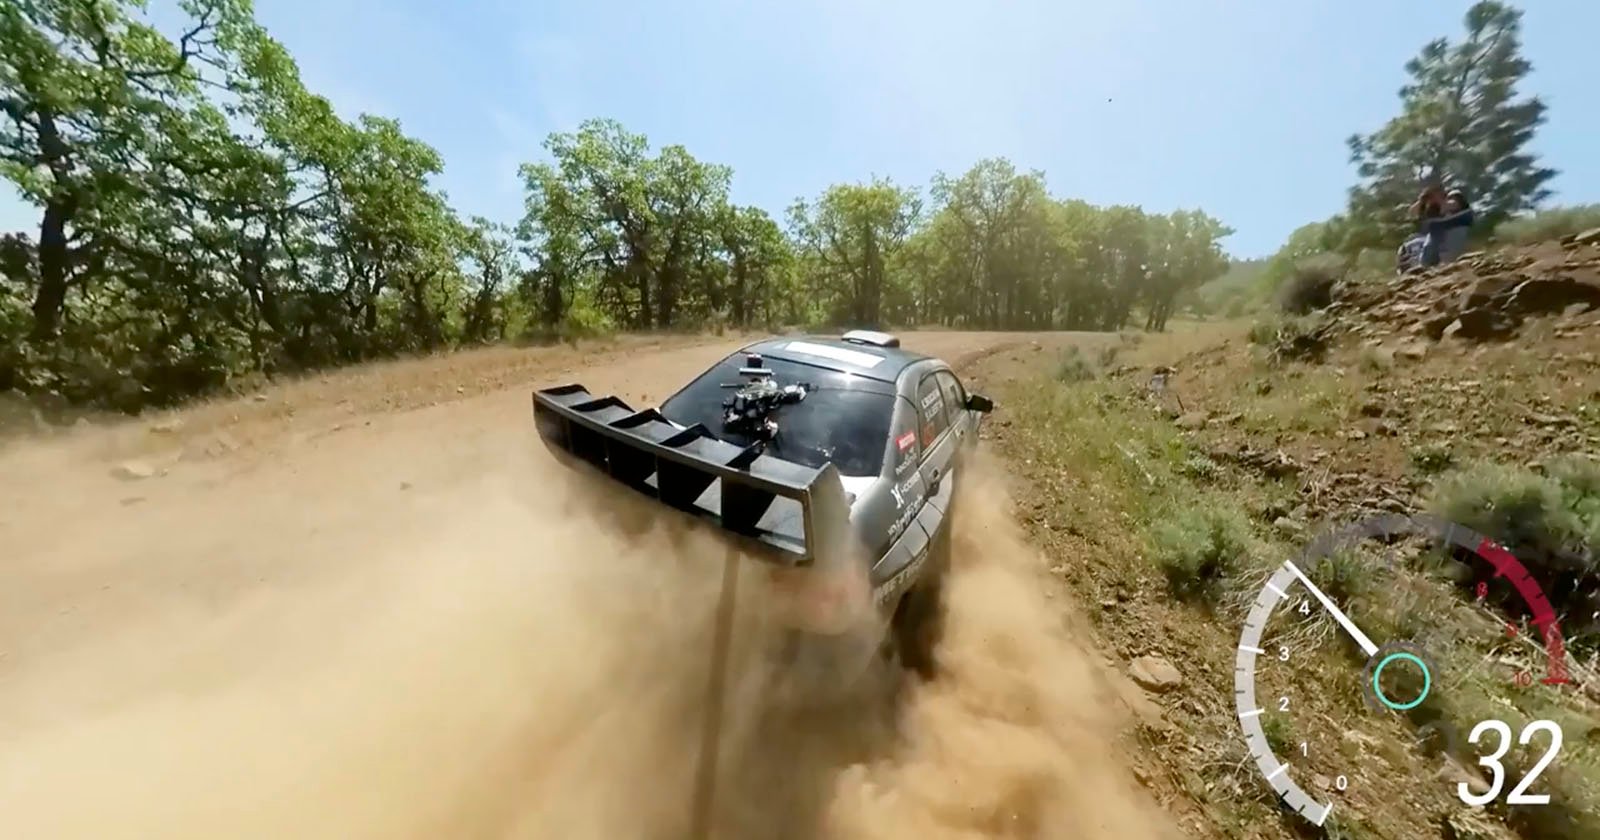  360 camera makes rally car racing look like 